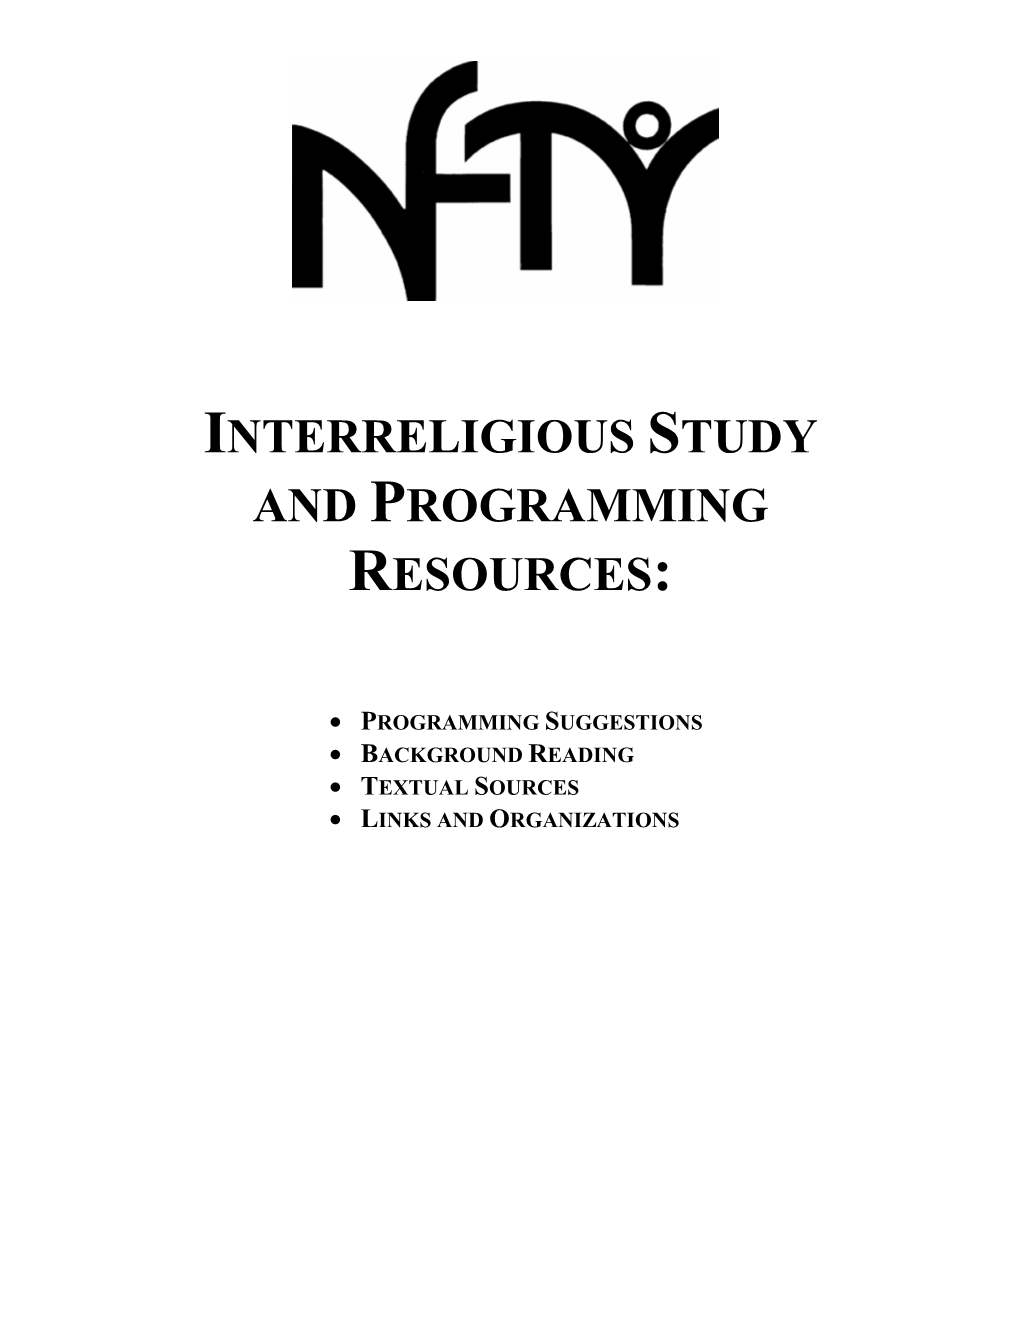 Interreligious Understanding Resources